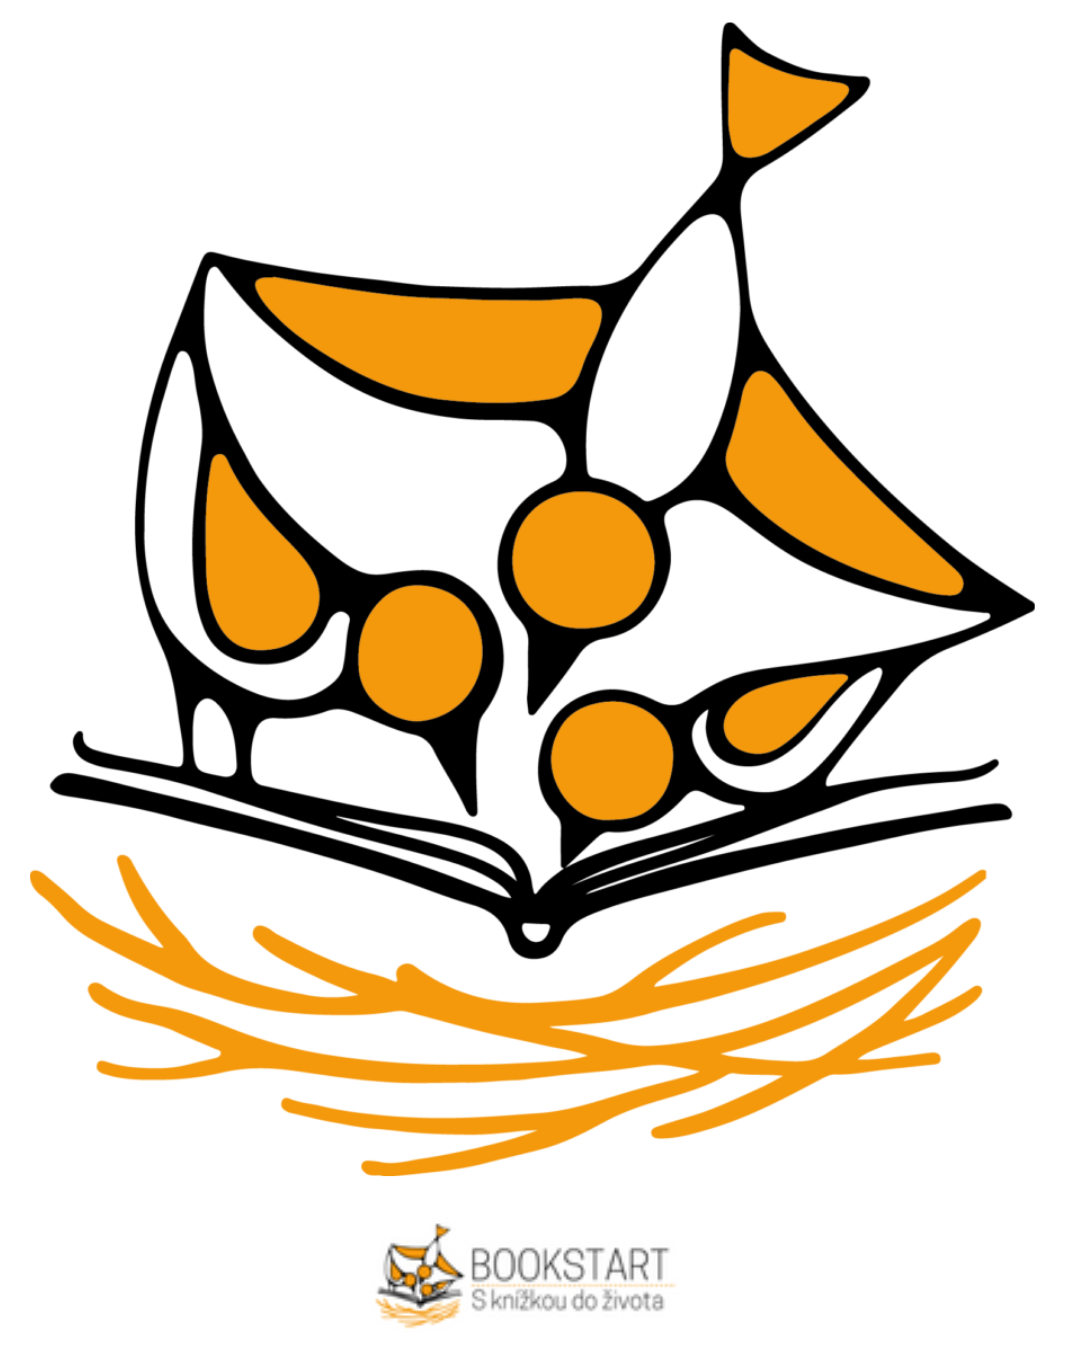 logo projektu Bookstart